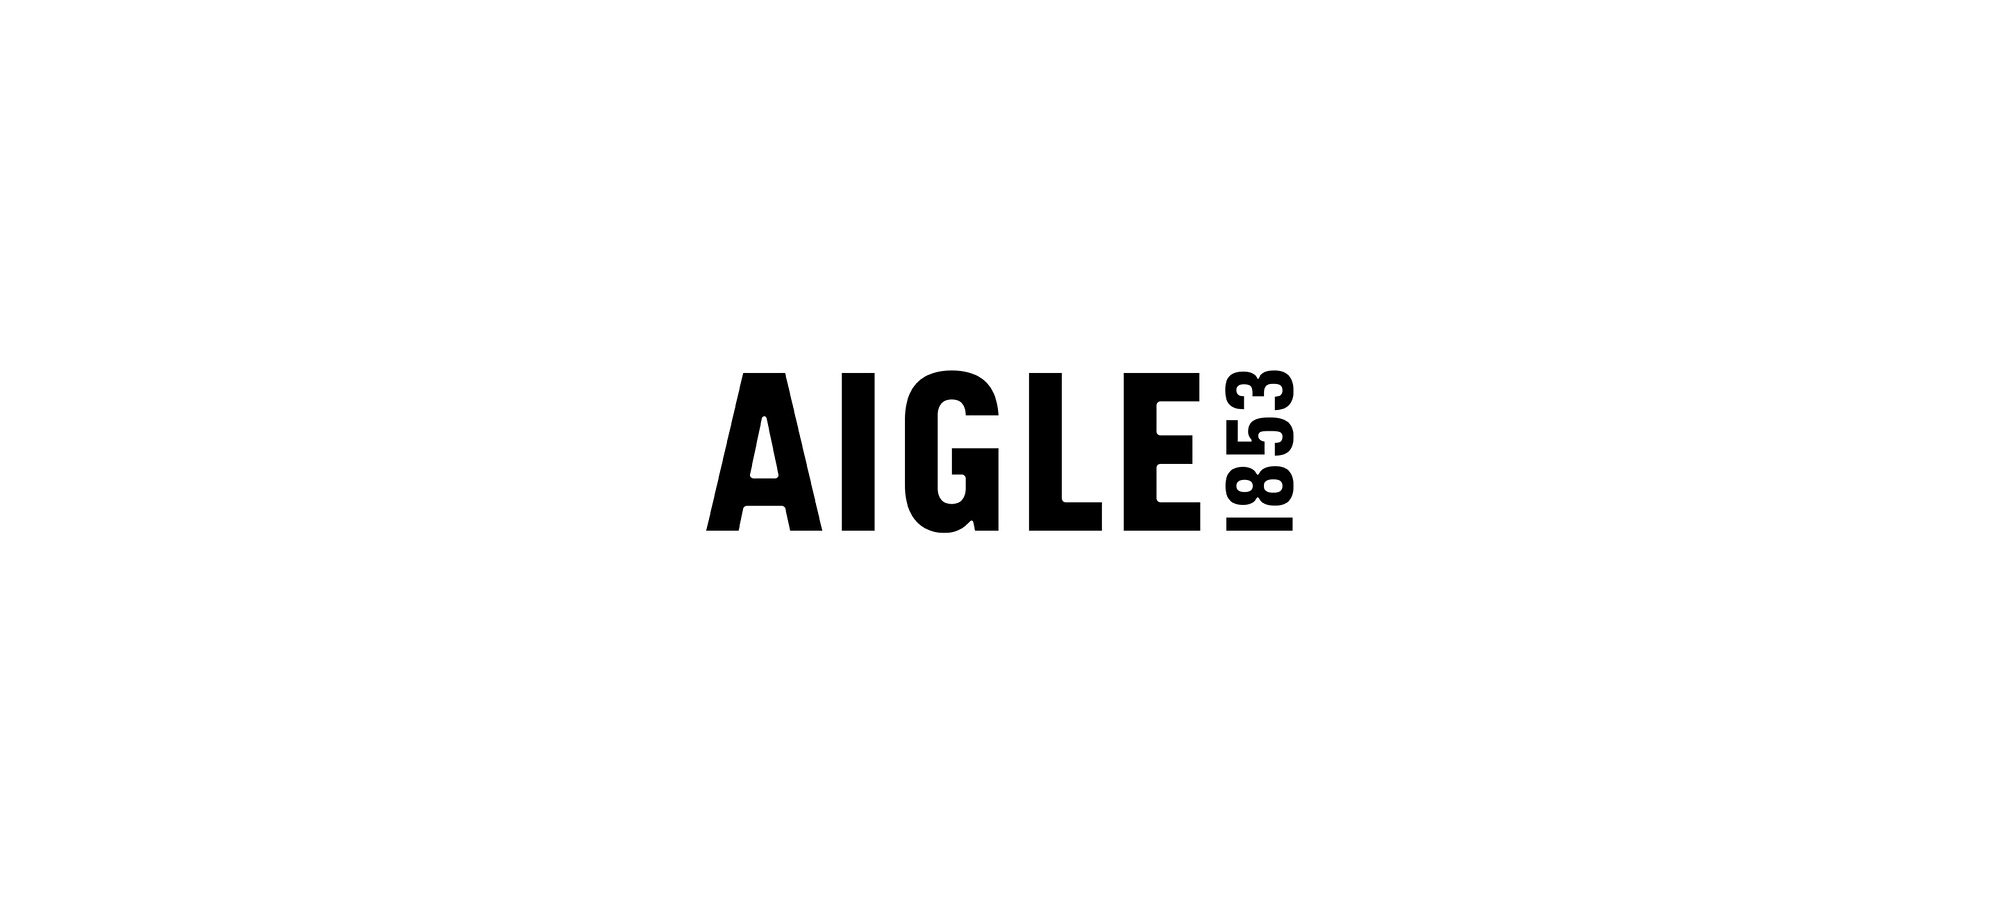 Aigle Logo Animation